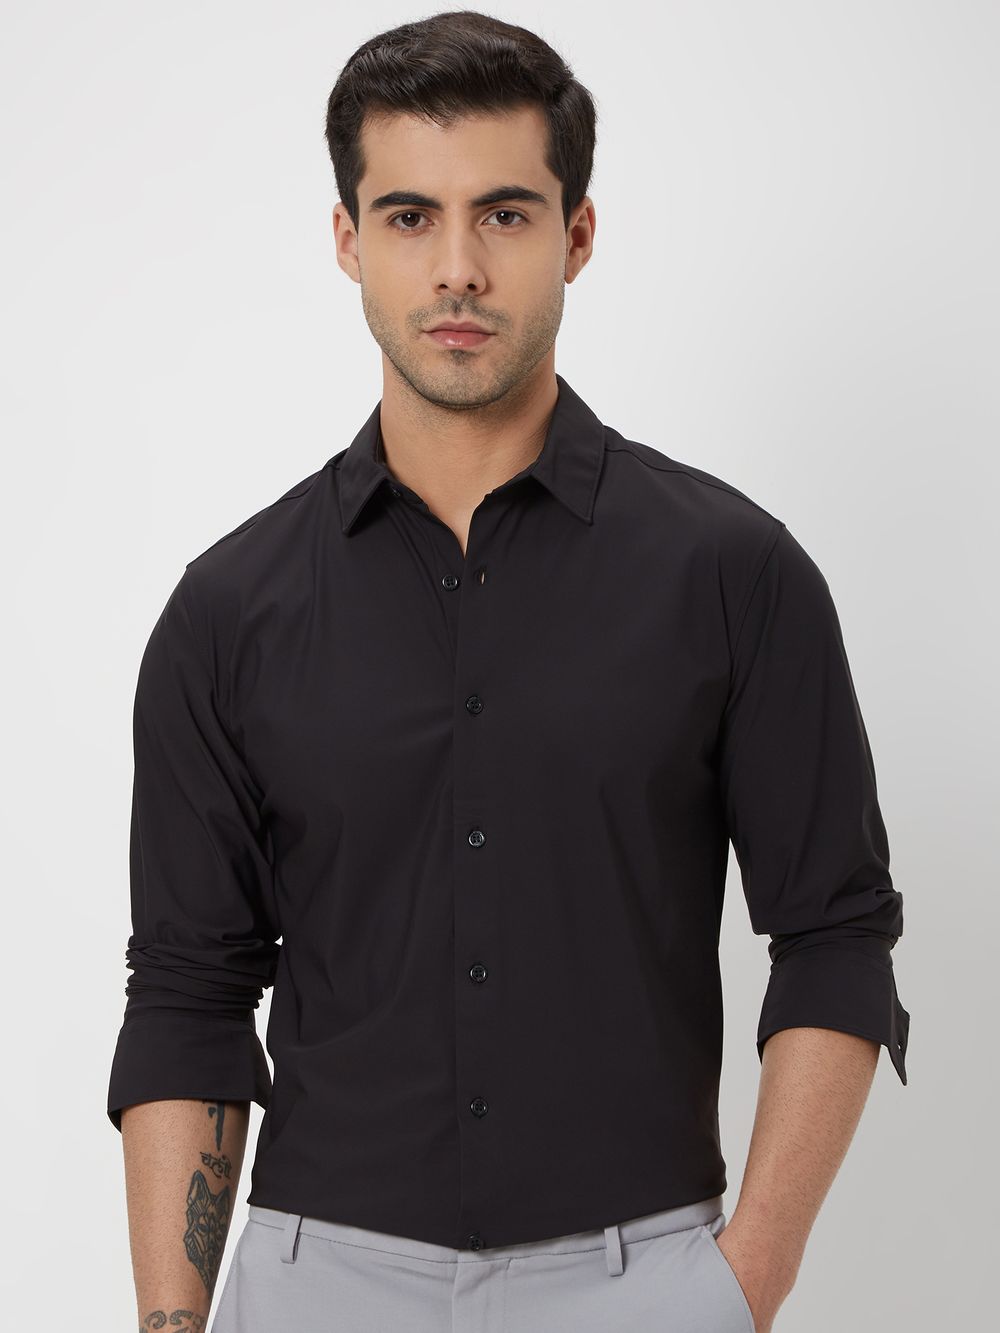 Black Knitted Plain Stretch Shirt